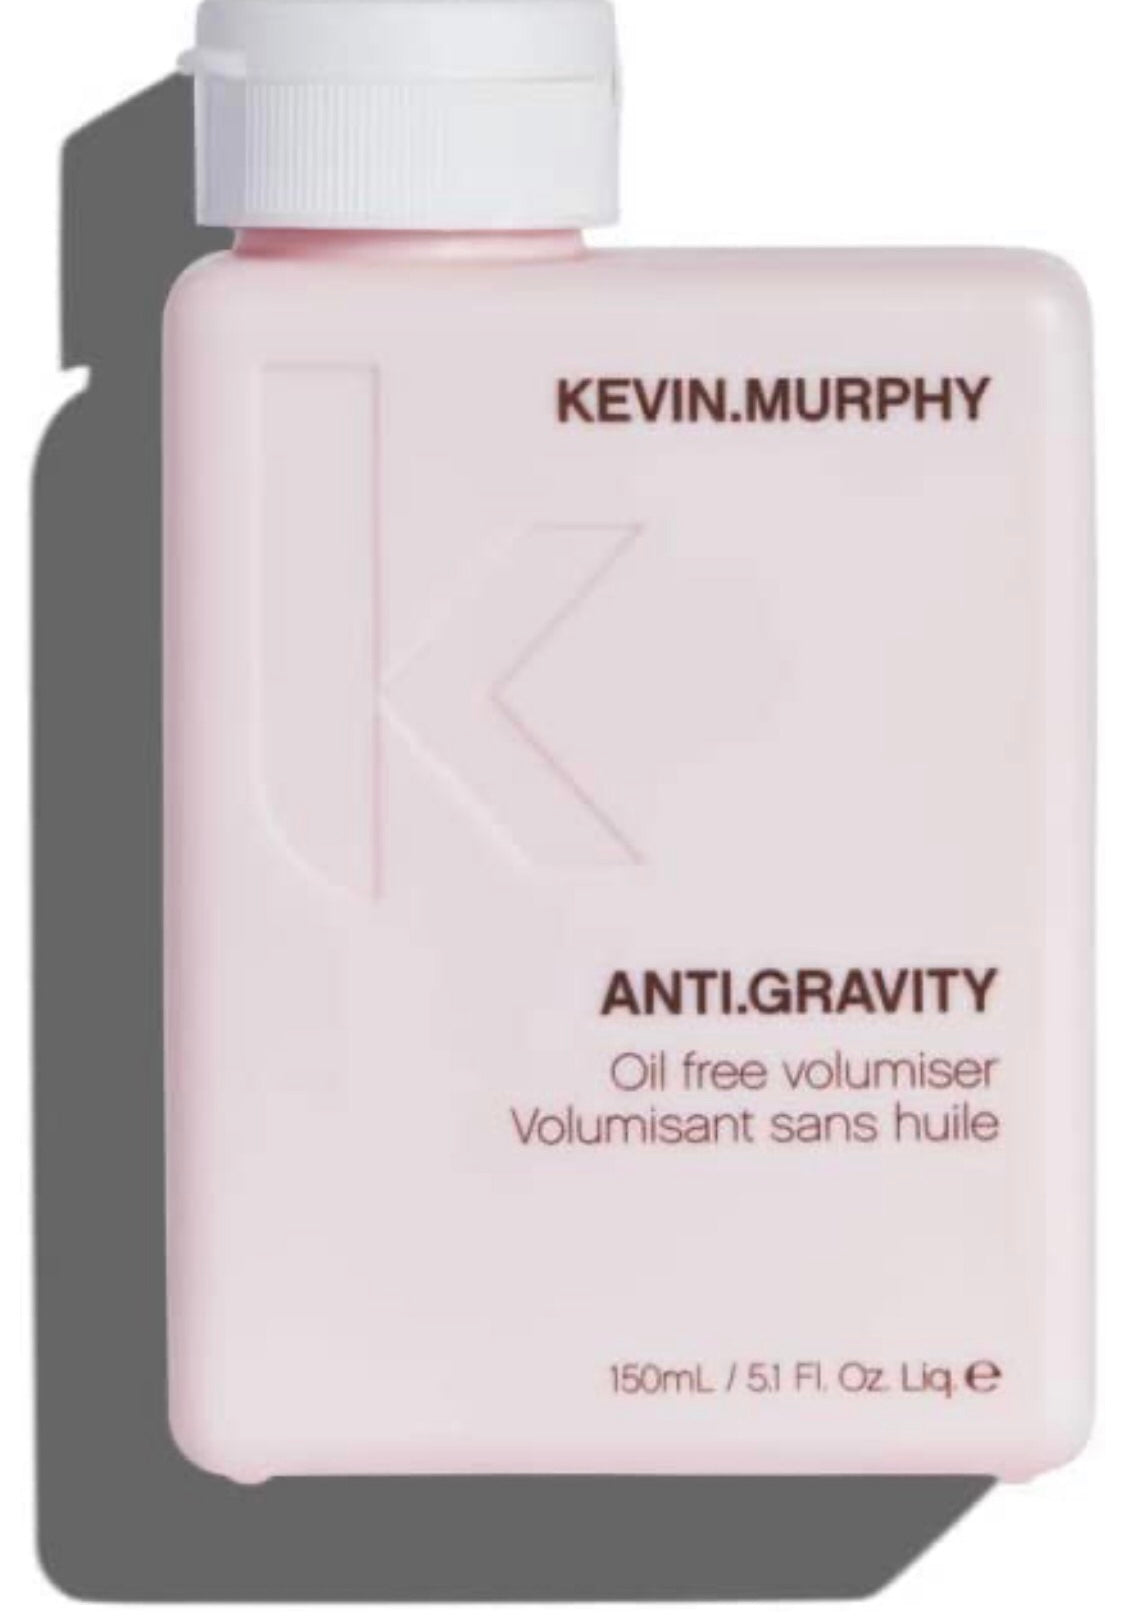 Kevin.Murphy - Anti.Gravity oil free volumiser 5.1 fl. oz. / 150 ml